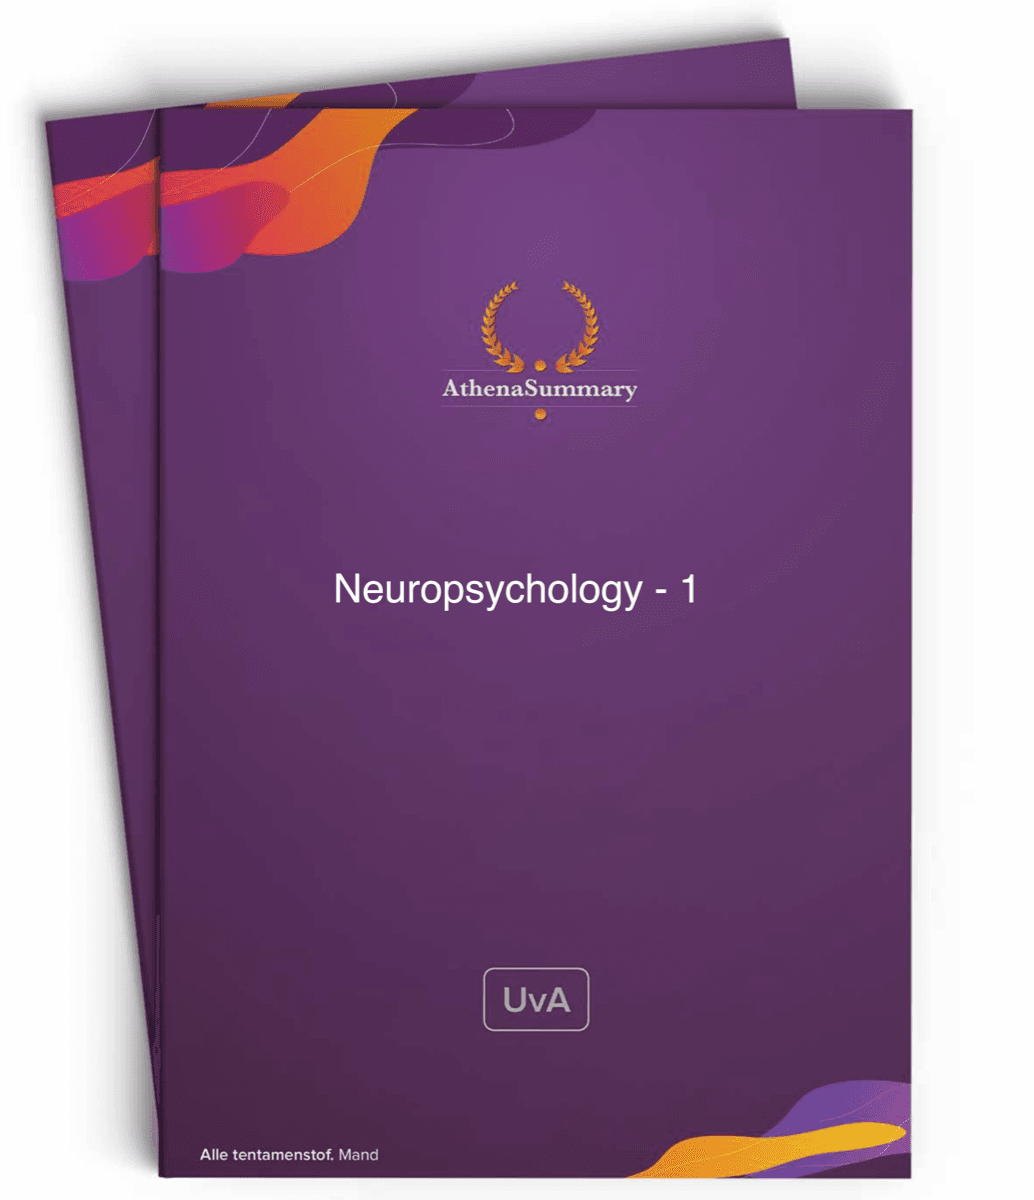 Literature Summary: Neuropsychology - 1